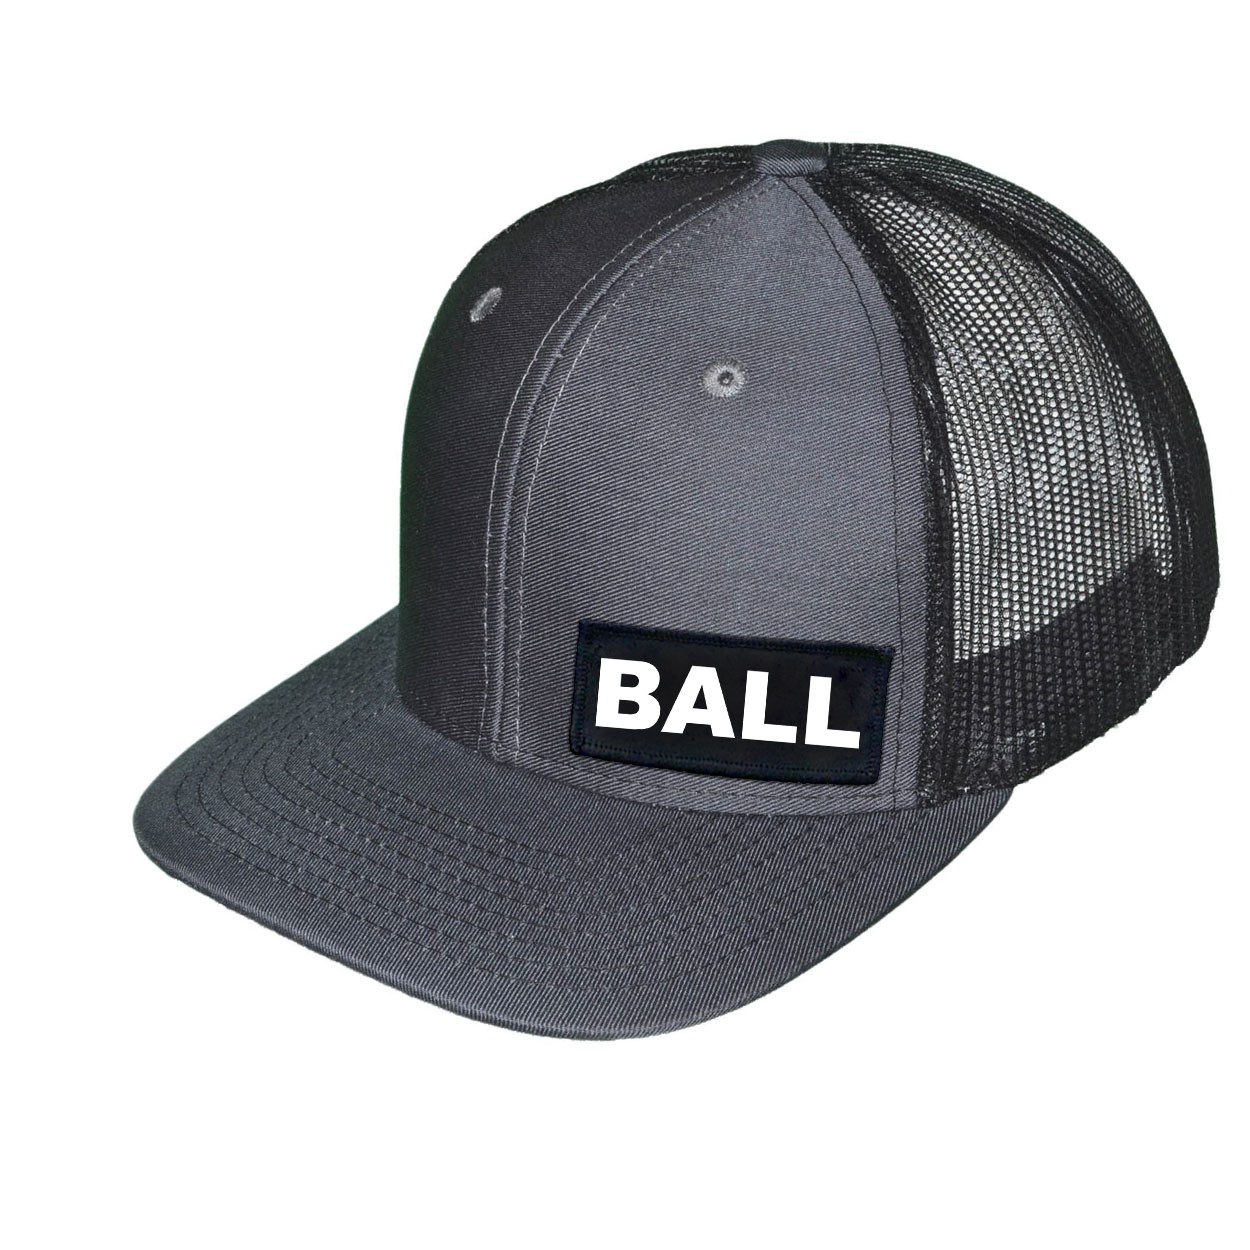 Ball Brand Logo Night Out Woven Patch Snapback Trucker Hat Dark Gray/Black (White Logo)